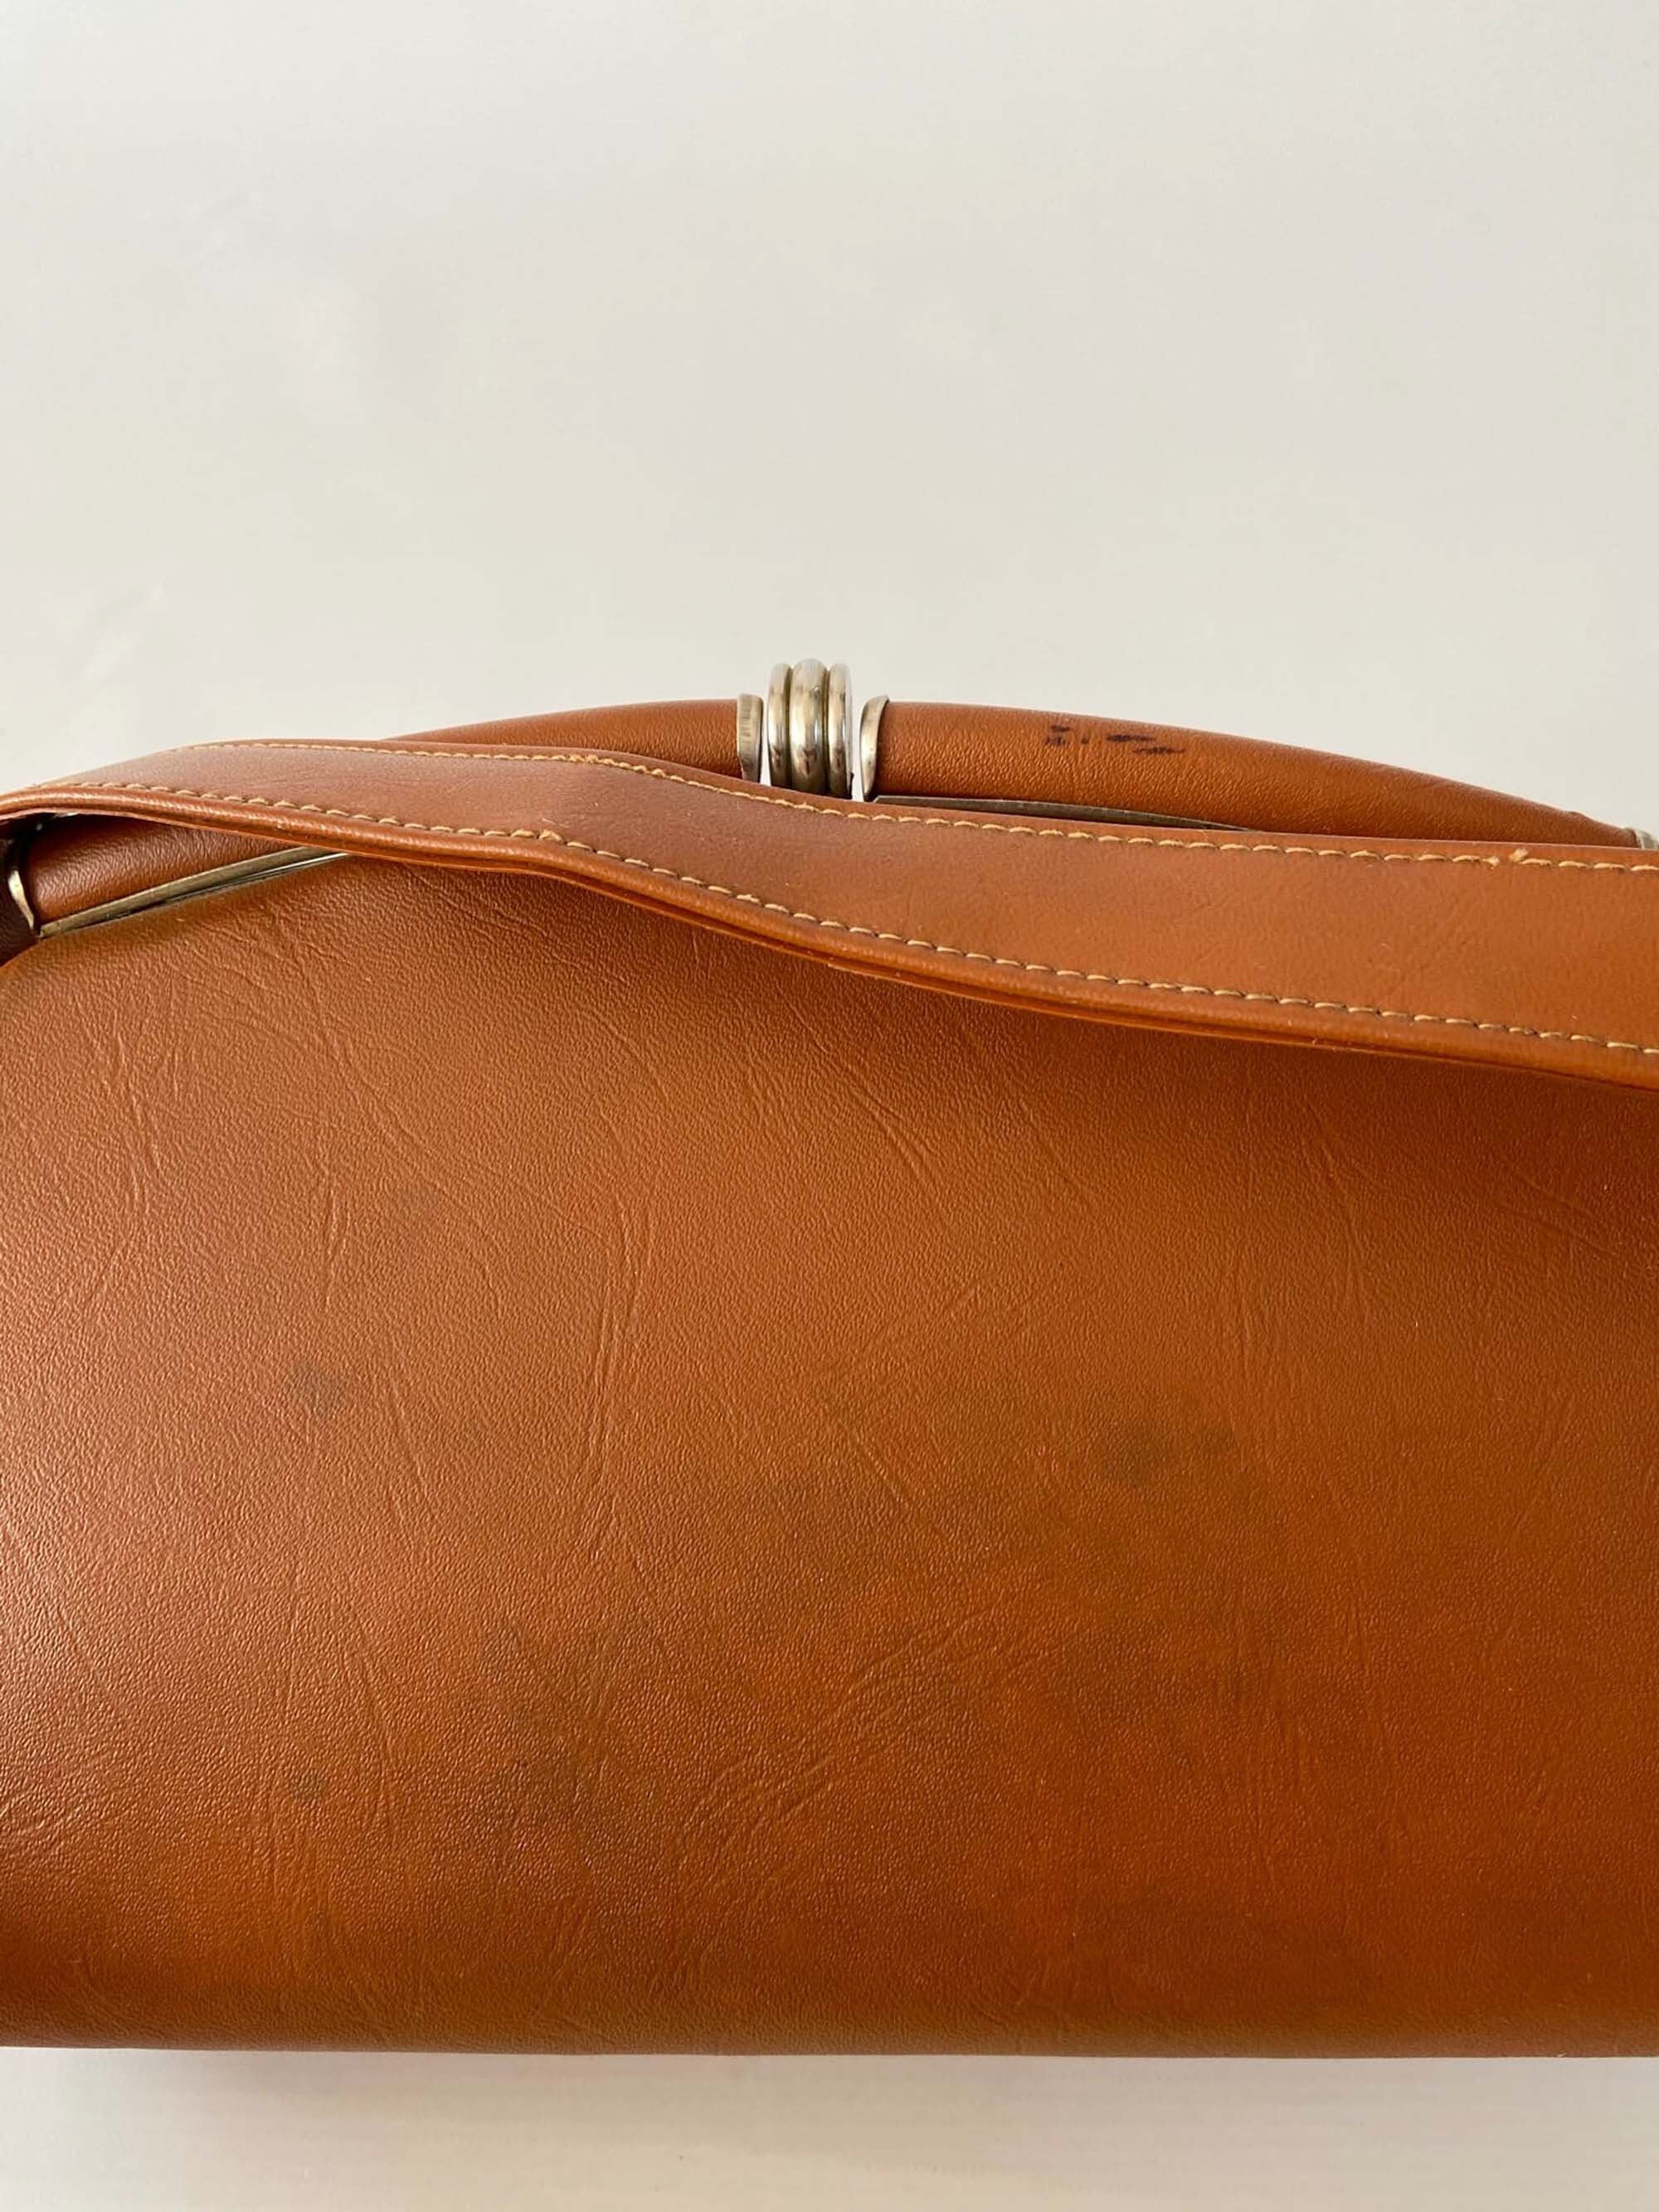 Authentic vintage faux leather 1950s handbag shoulder bag | Etsy